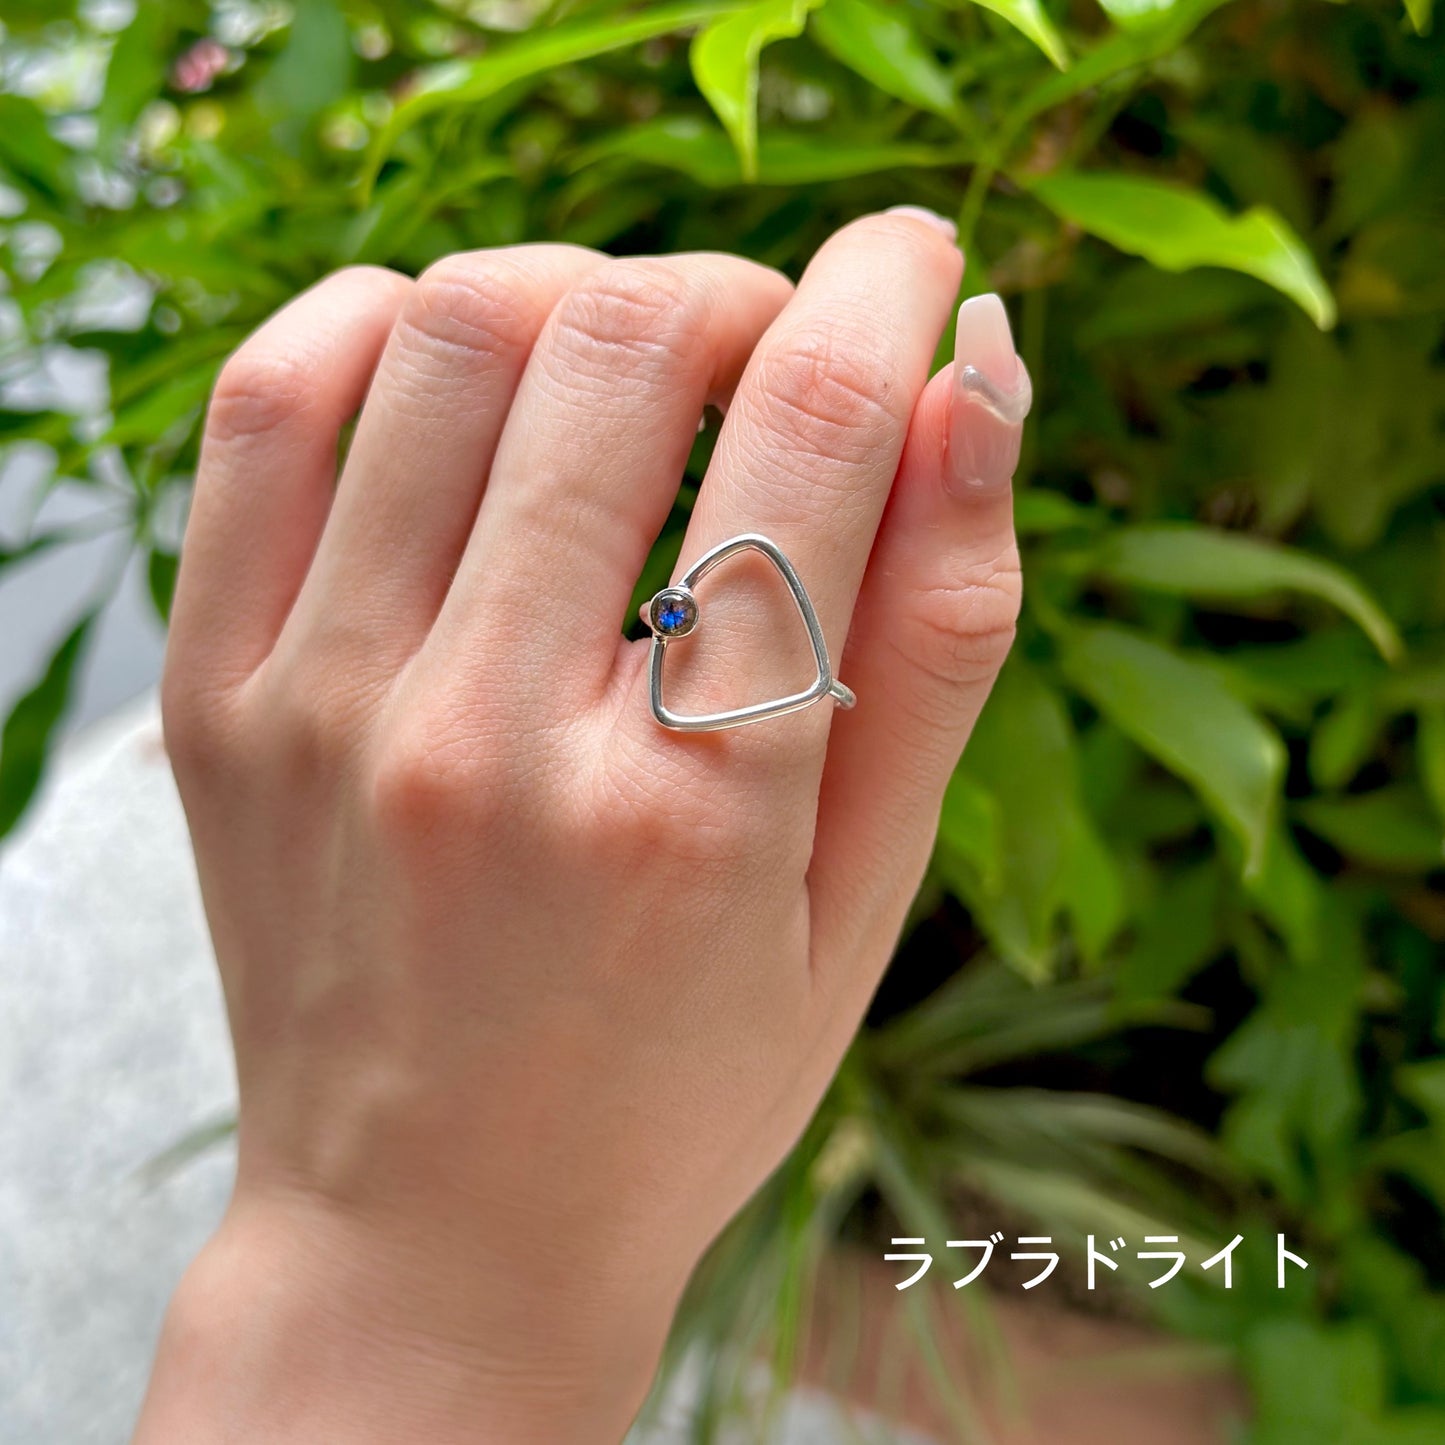 Silver925 design ring 19